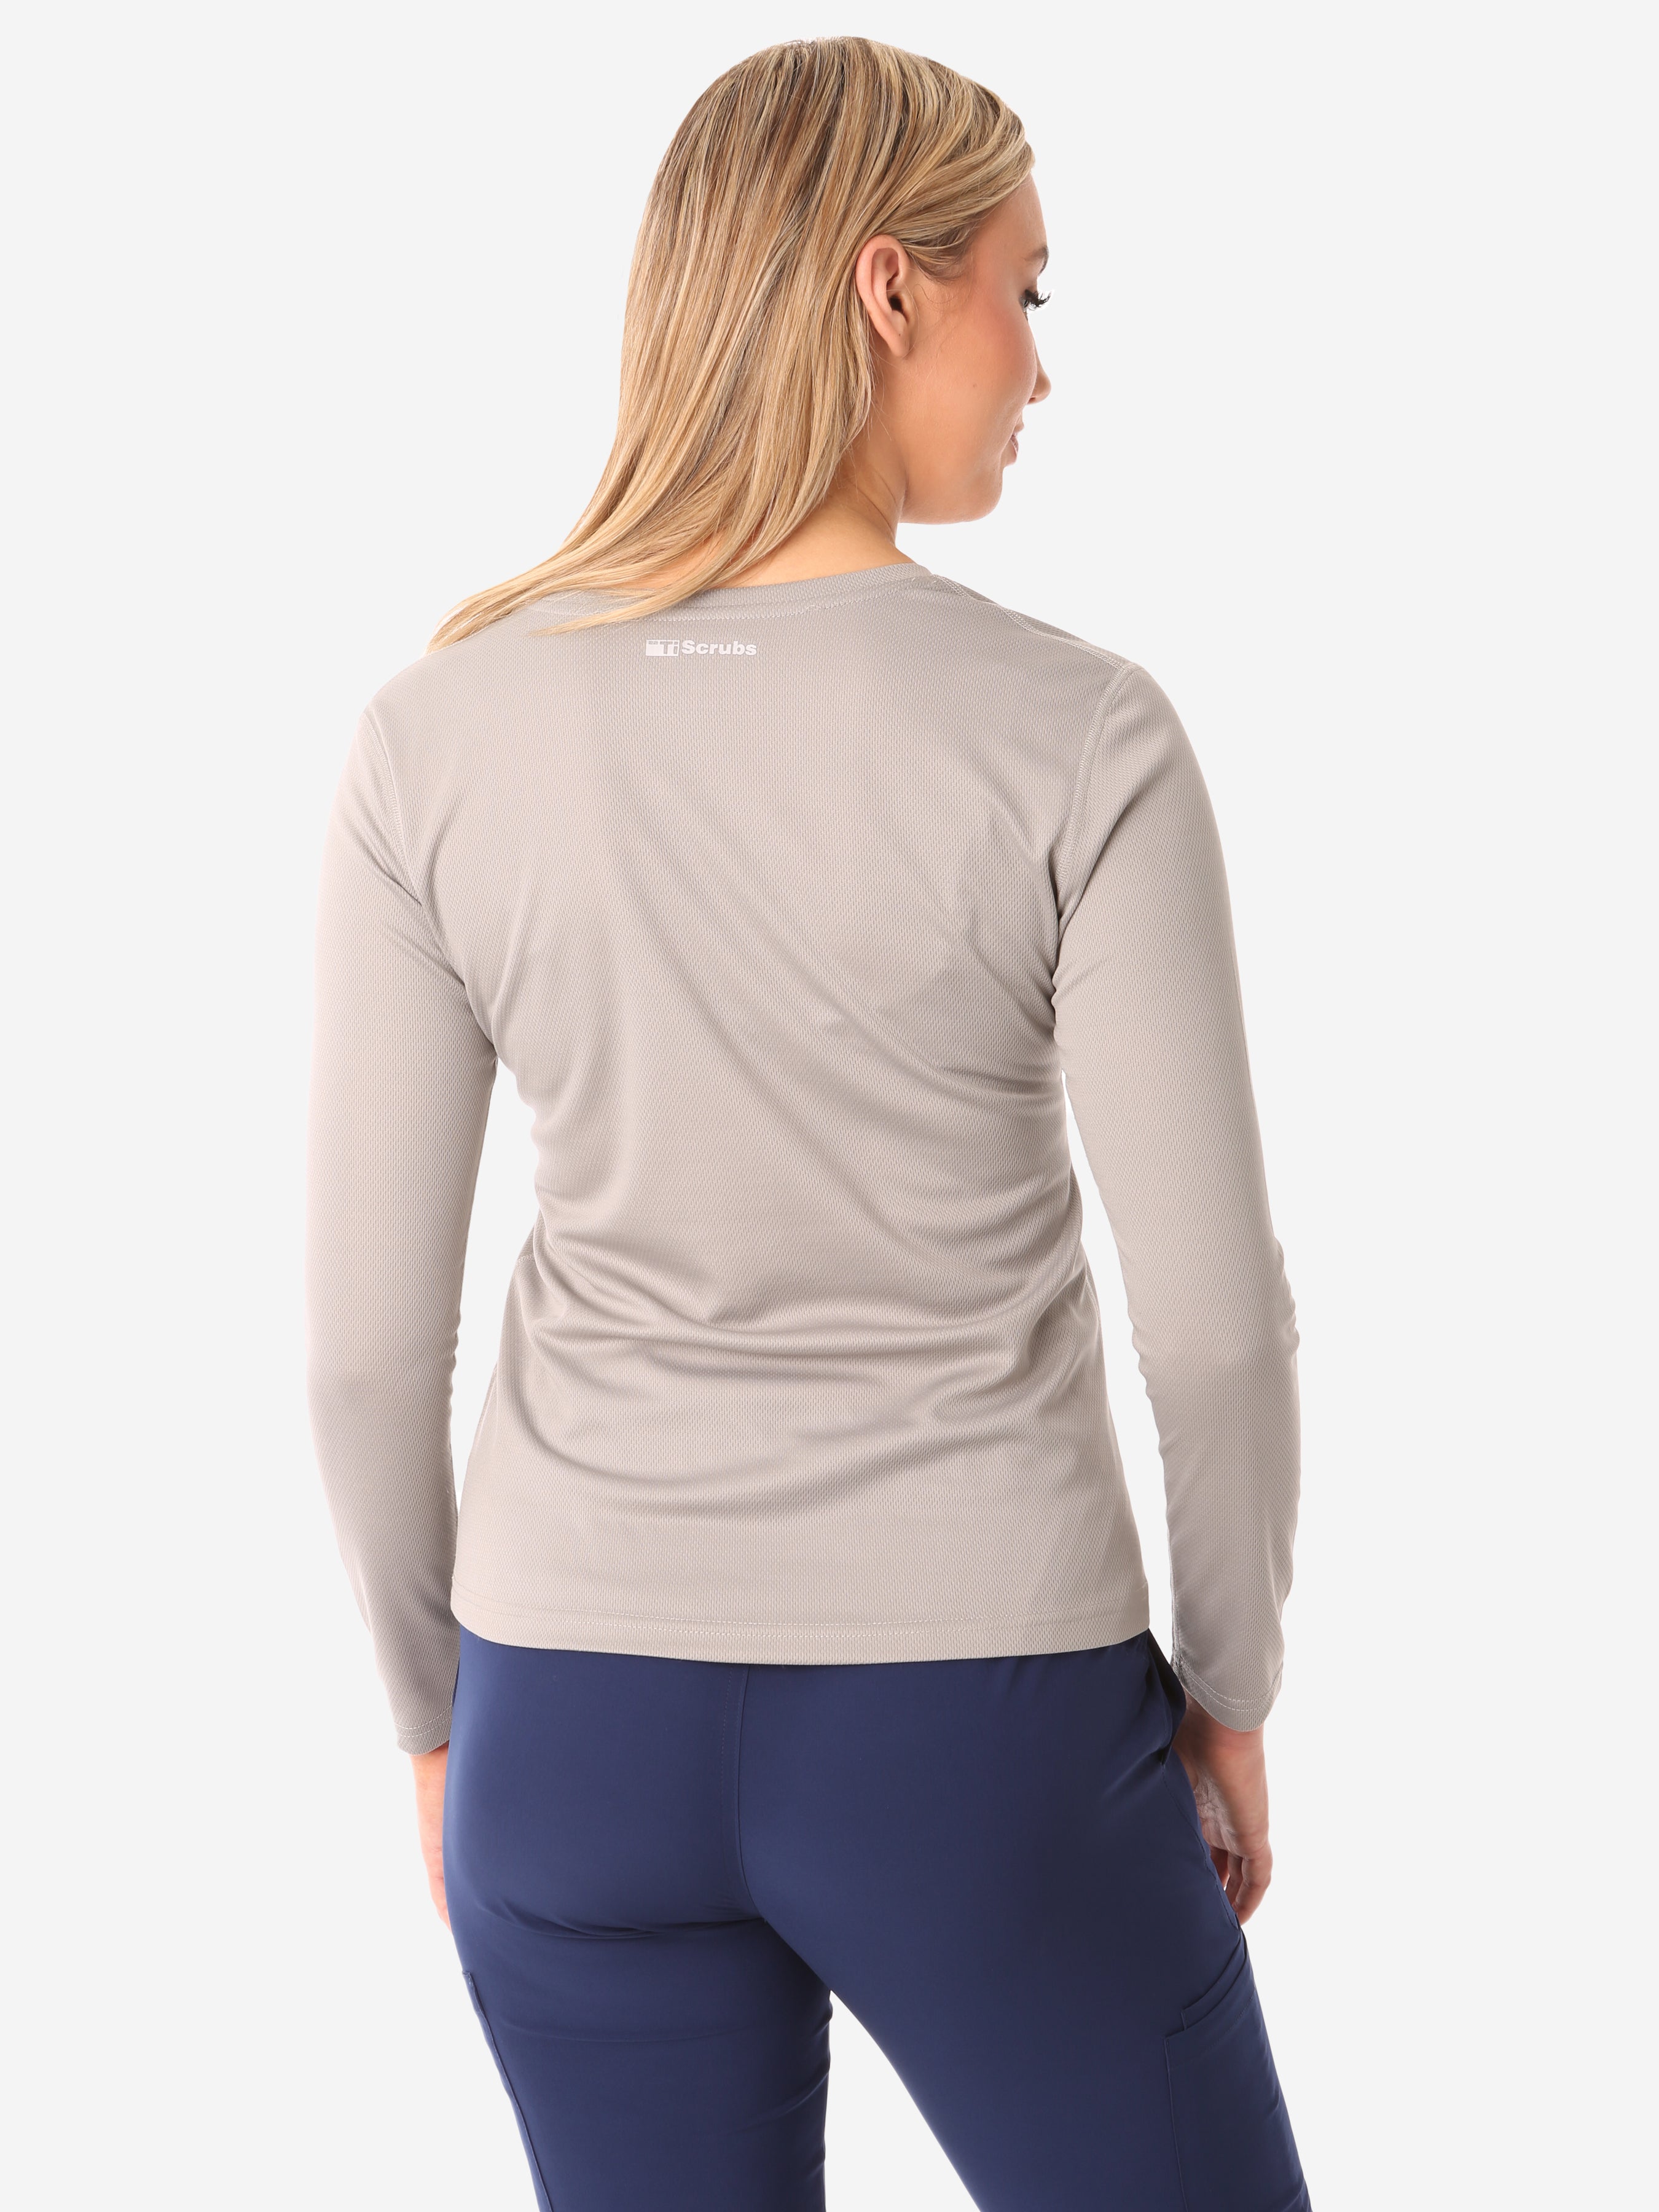 Women's Long Sleeve Scrub Undershirt - ScrubJoy